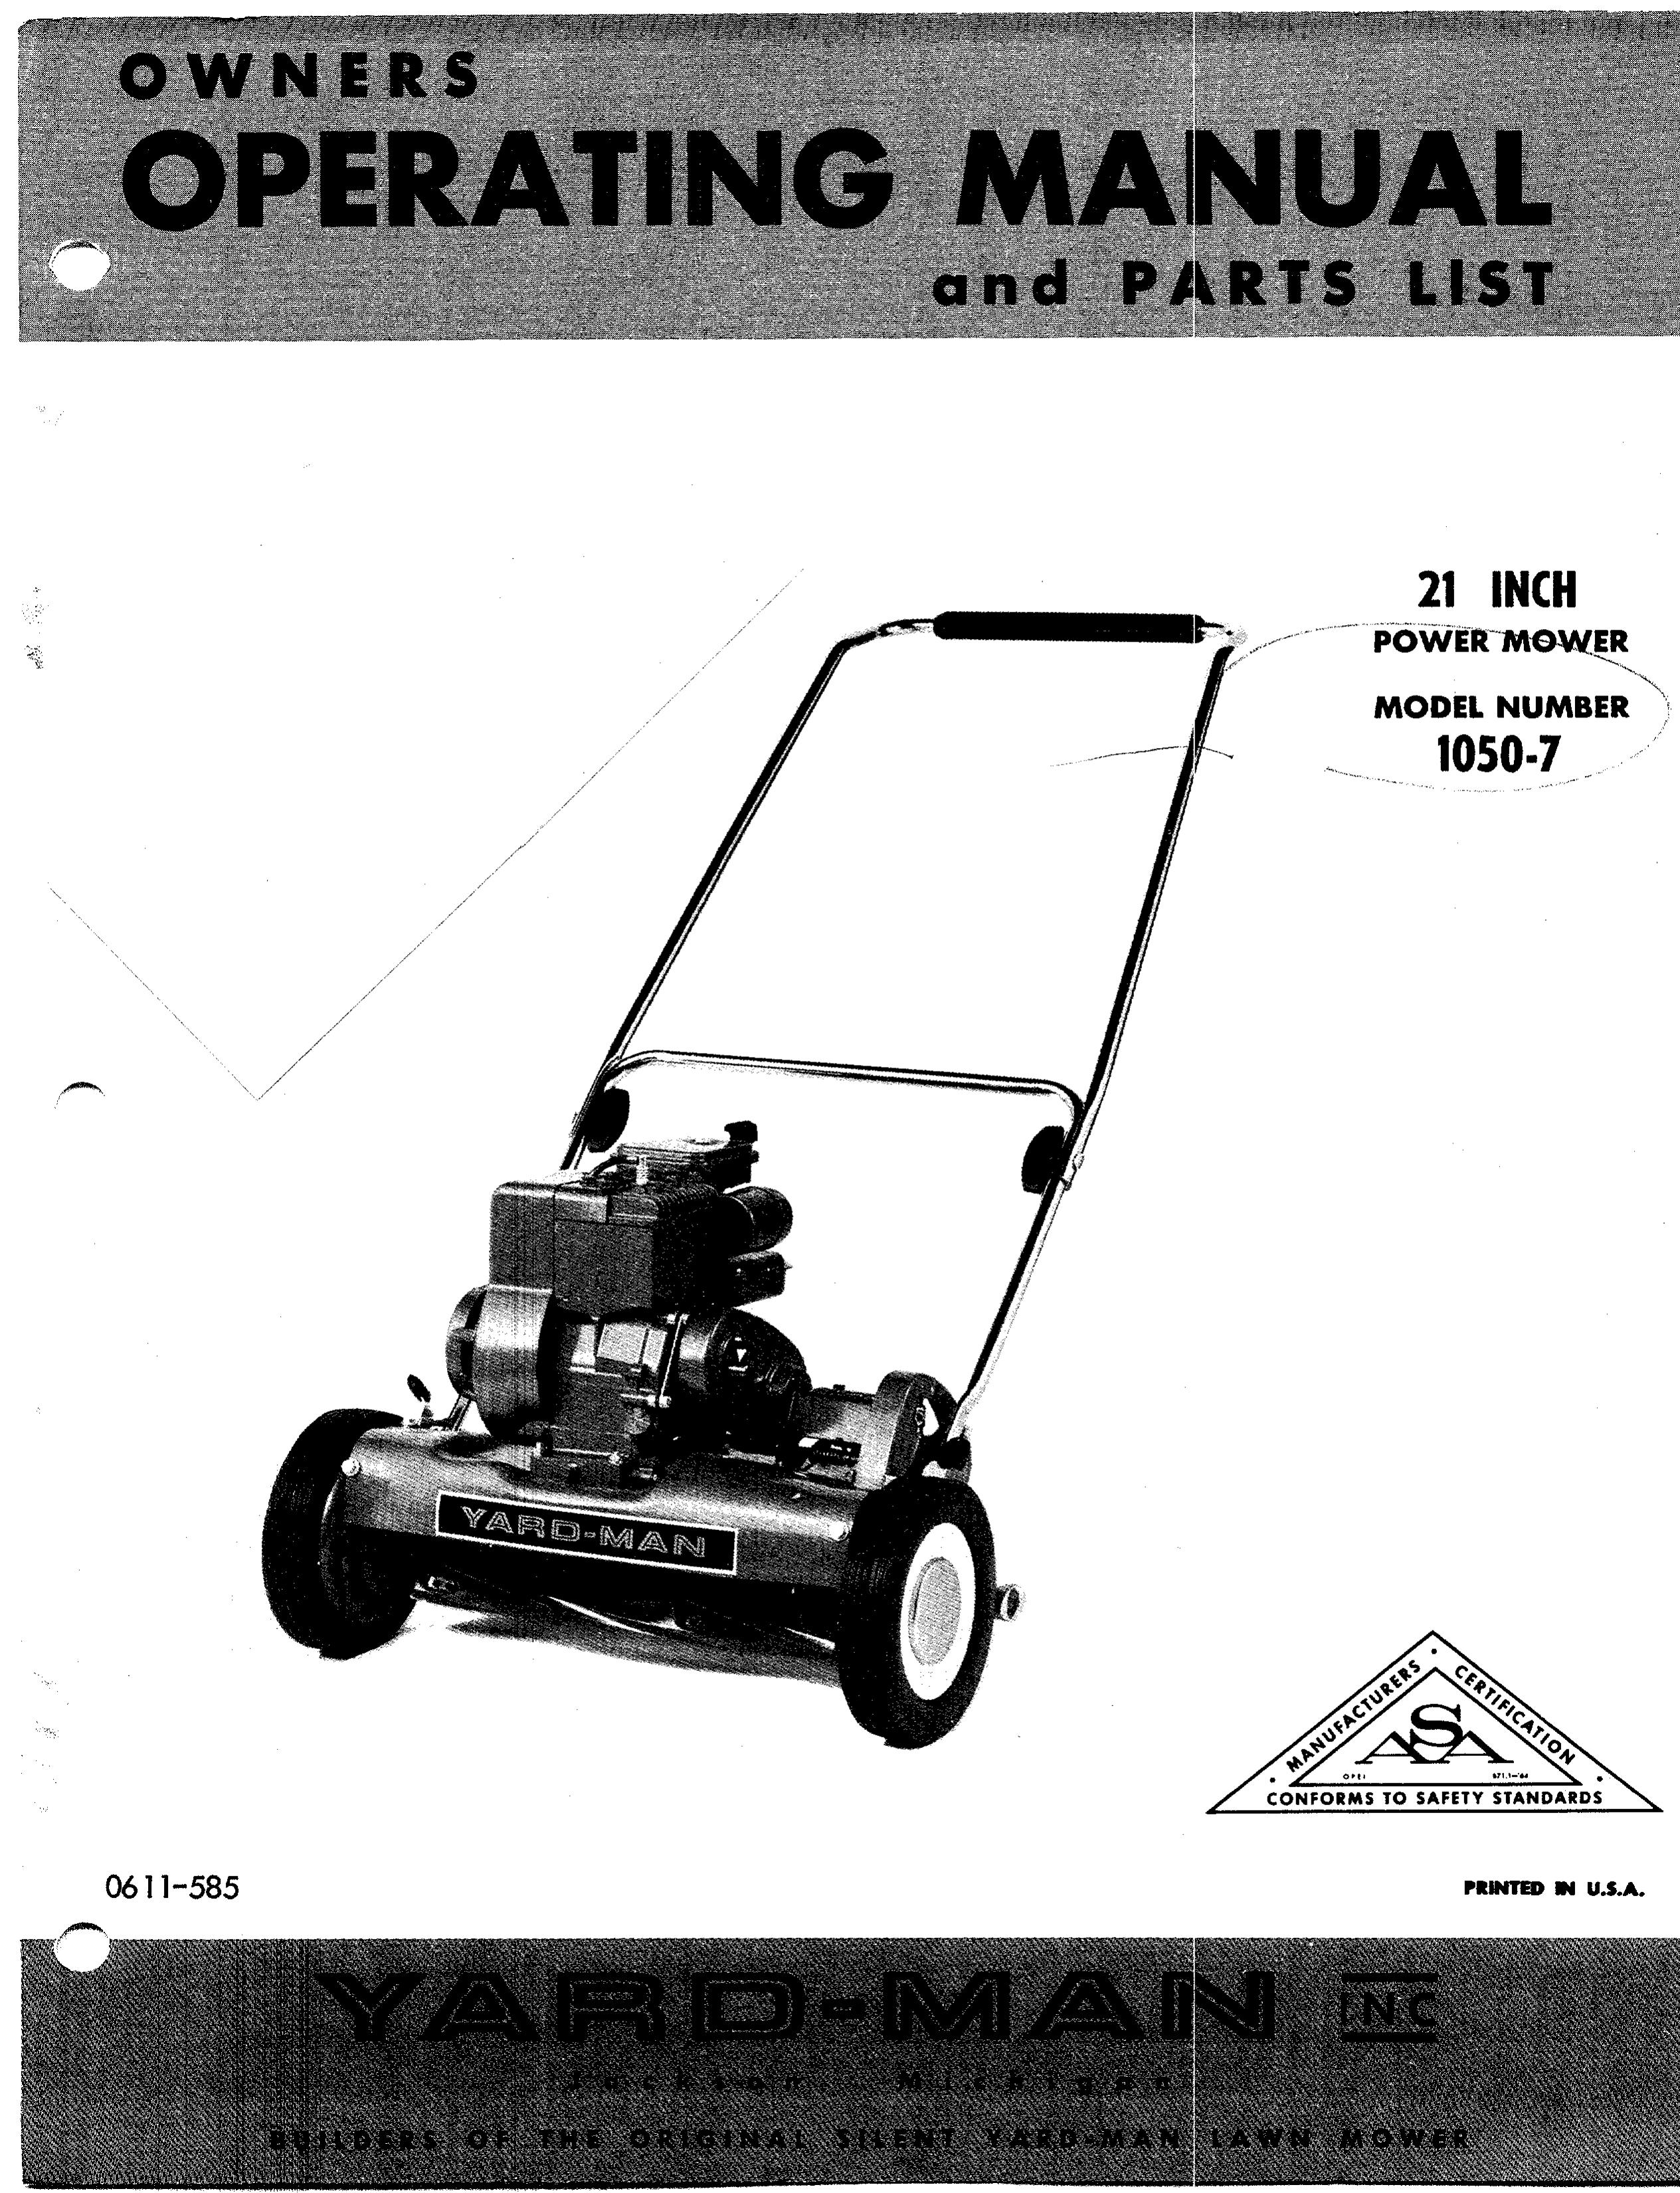 Yard-Man 1050-7 Lawn Mower User Manual